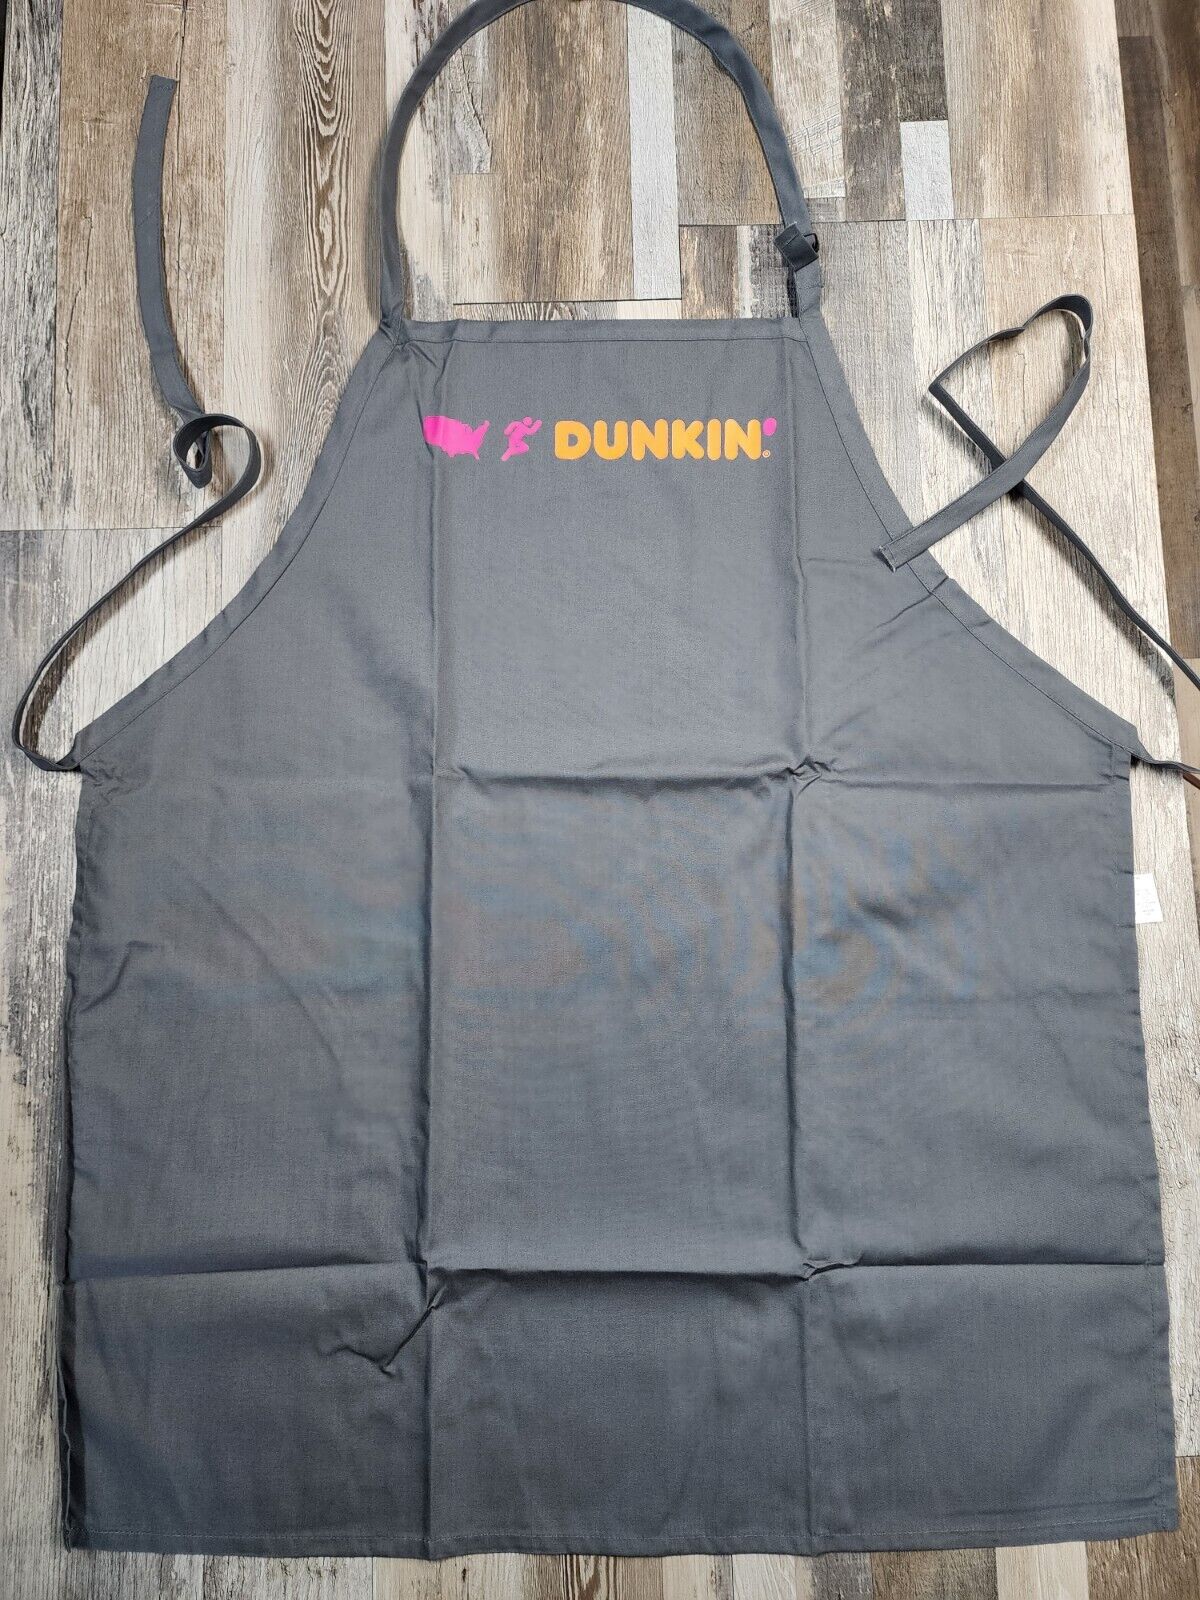 New Official DUNKIN DONUTS Uniform Apron Adjustable Adult Small / Medium Gray